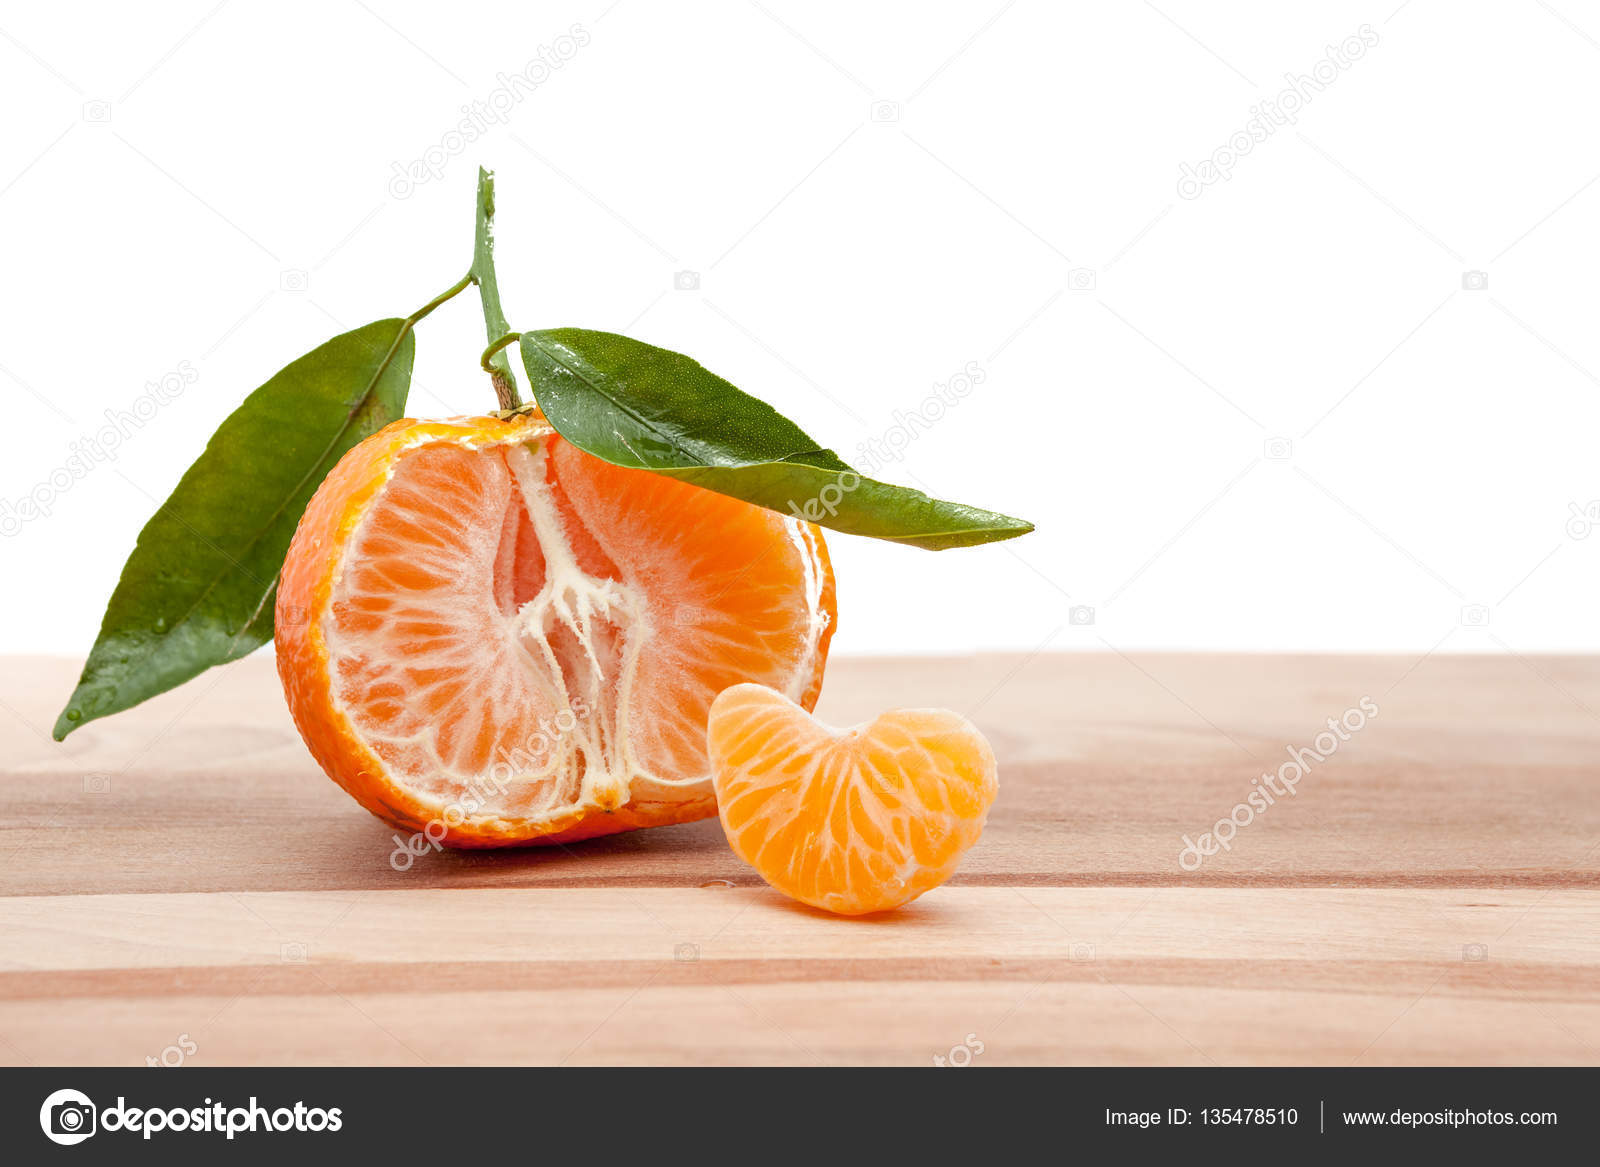 https://st3.depositphotos.com/1937019/13547/i/1600/depositphotos_135478510-stock-photo-half-tangerine-whit-leaf.jpg